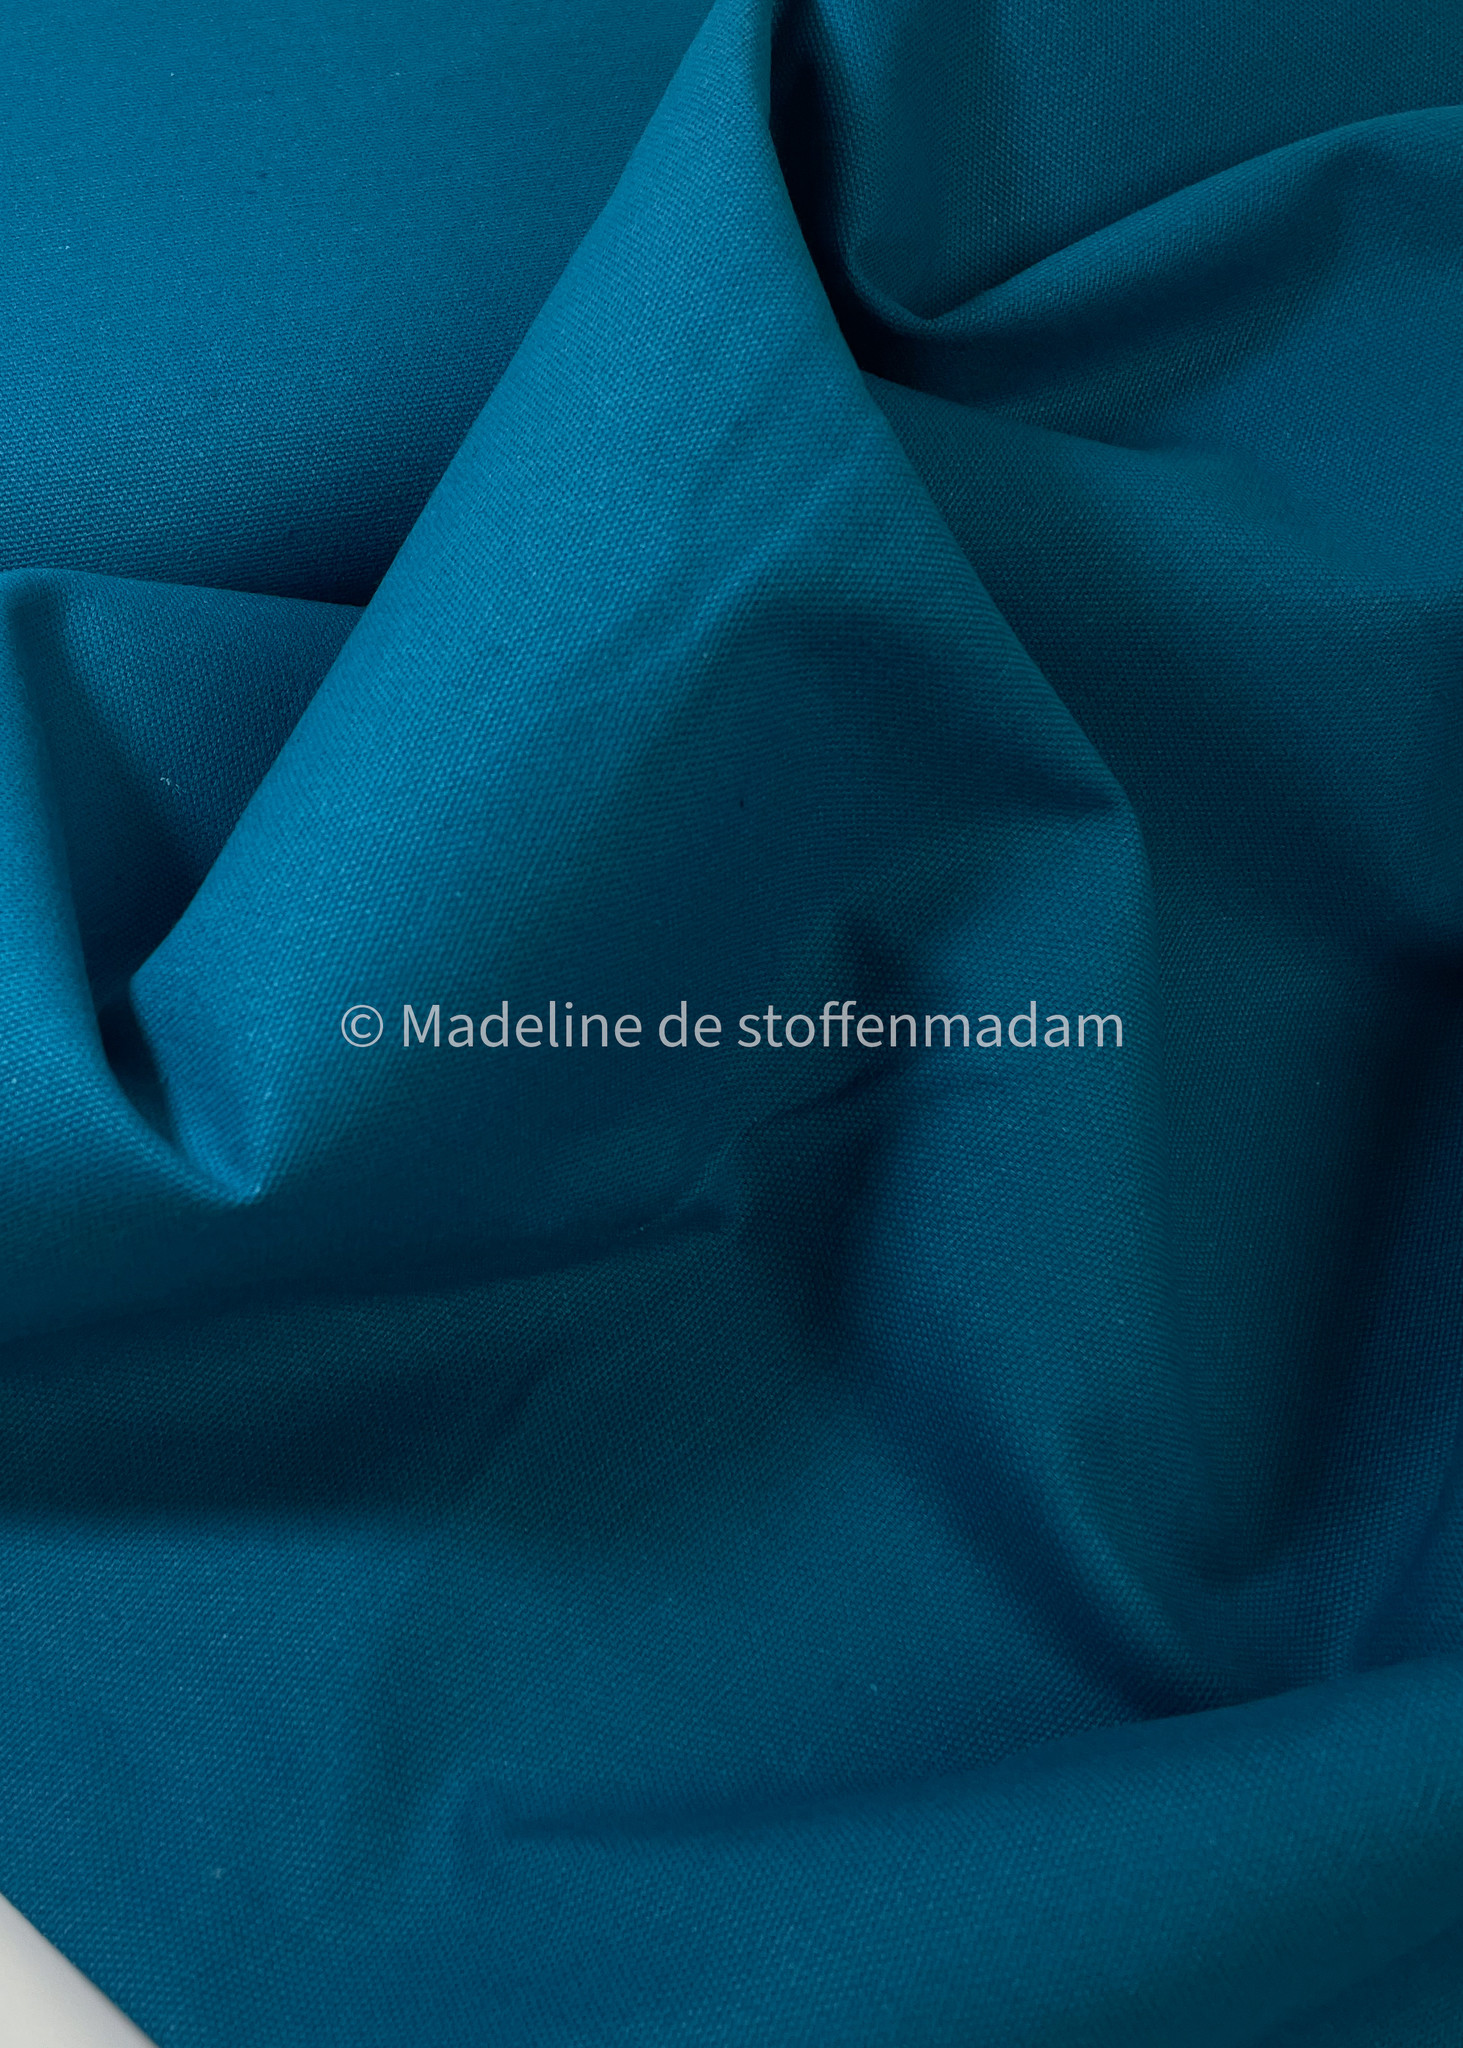 Lee lelijk omhelzing petrolblauw - mooie stevige canvas - 100% katoen - Madeline de stoffenmadam